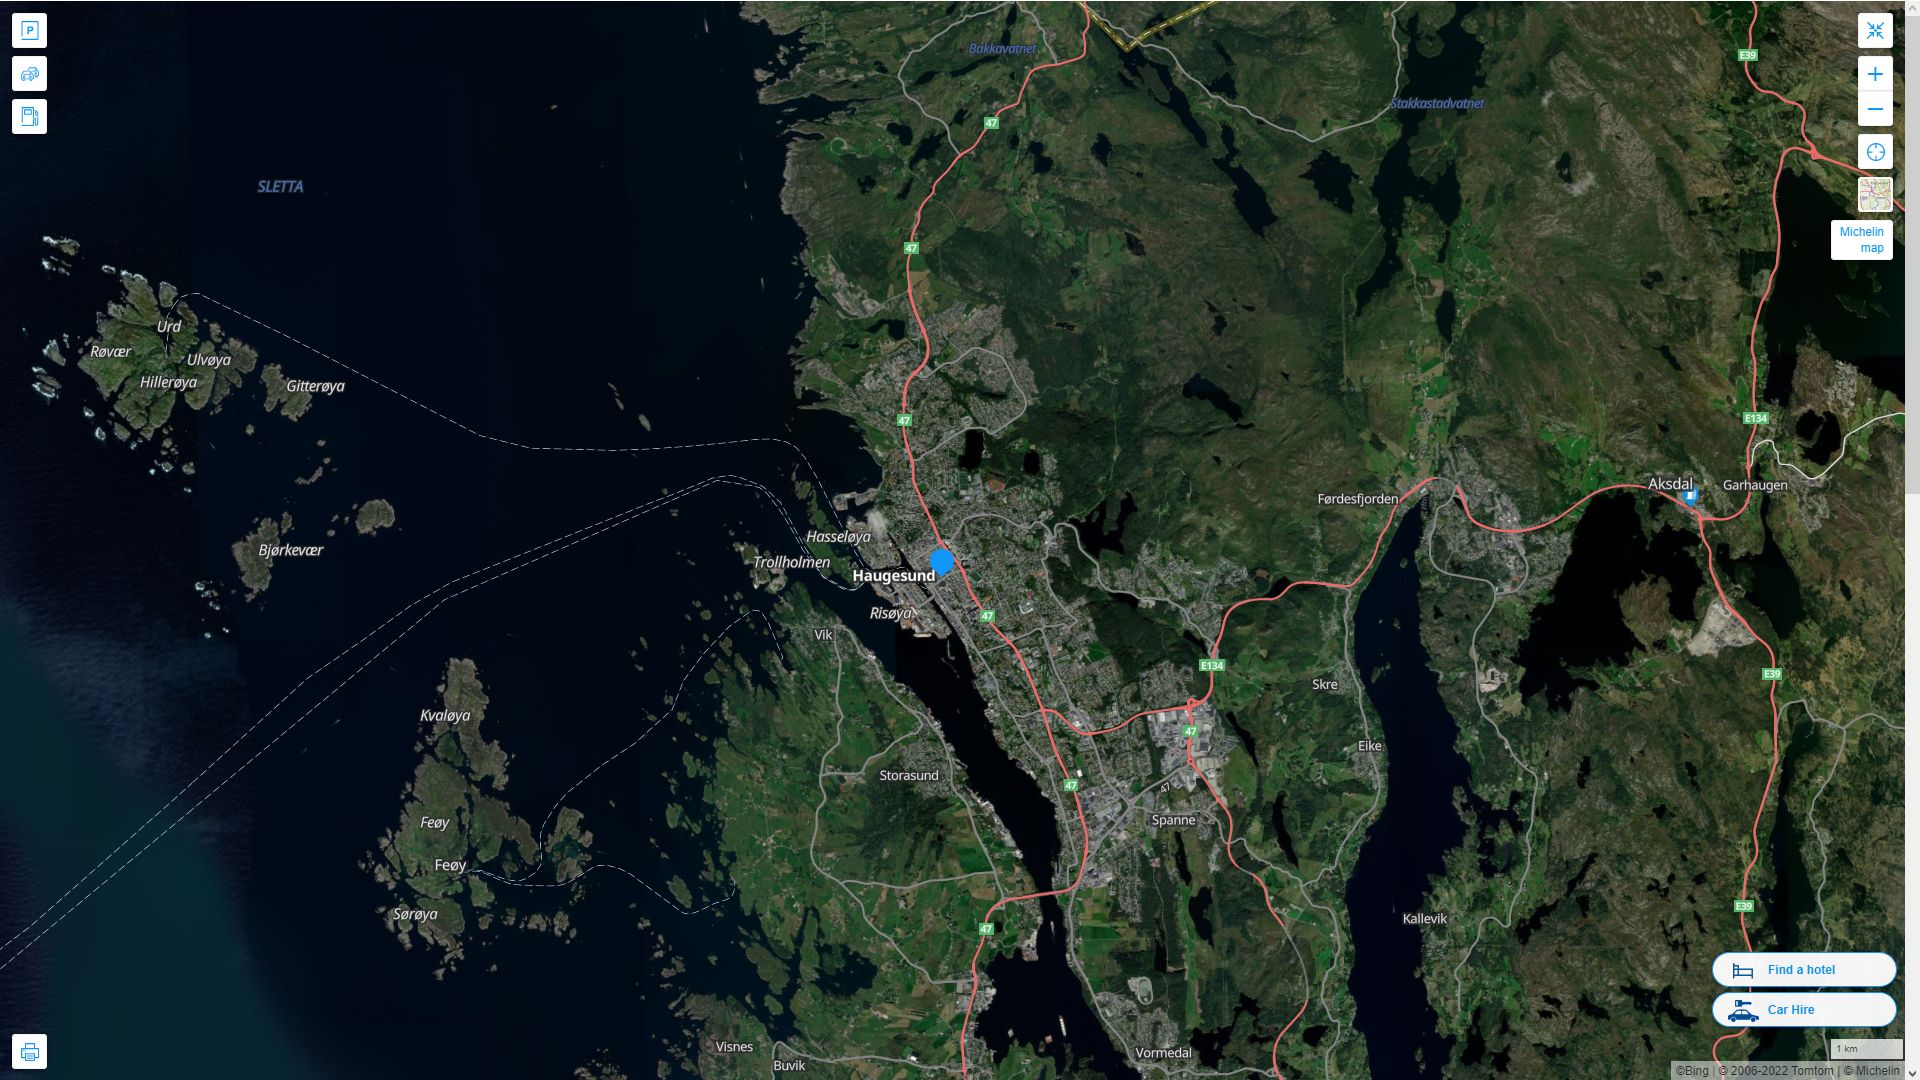 Haugesund Norvege Autoroute et carte routiere avec vue satellite